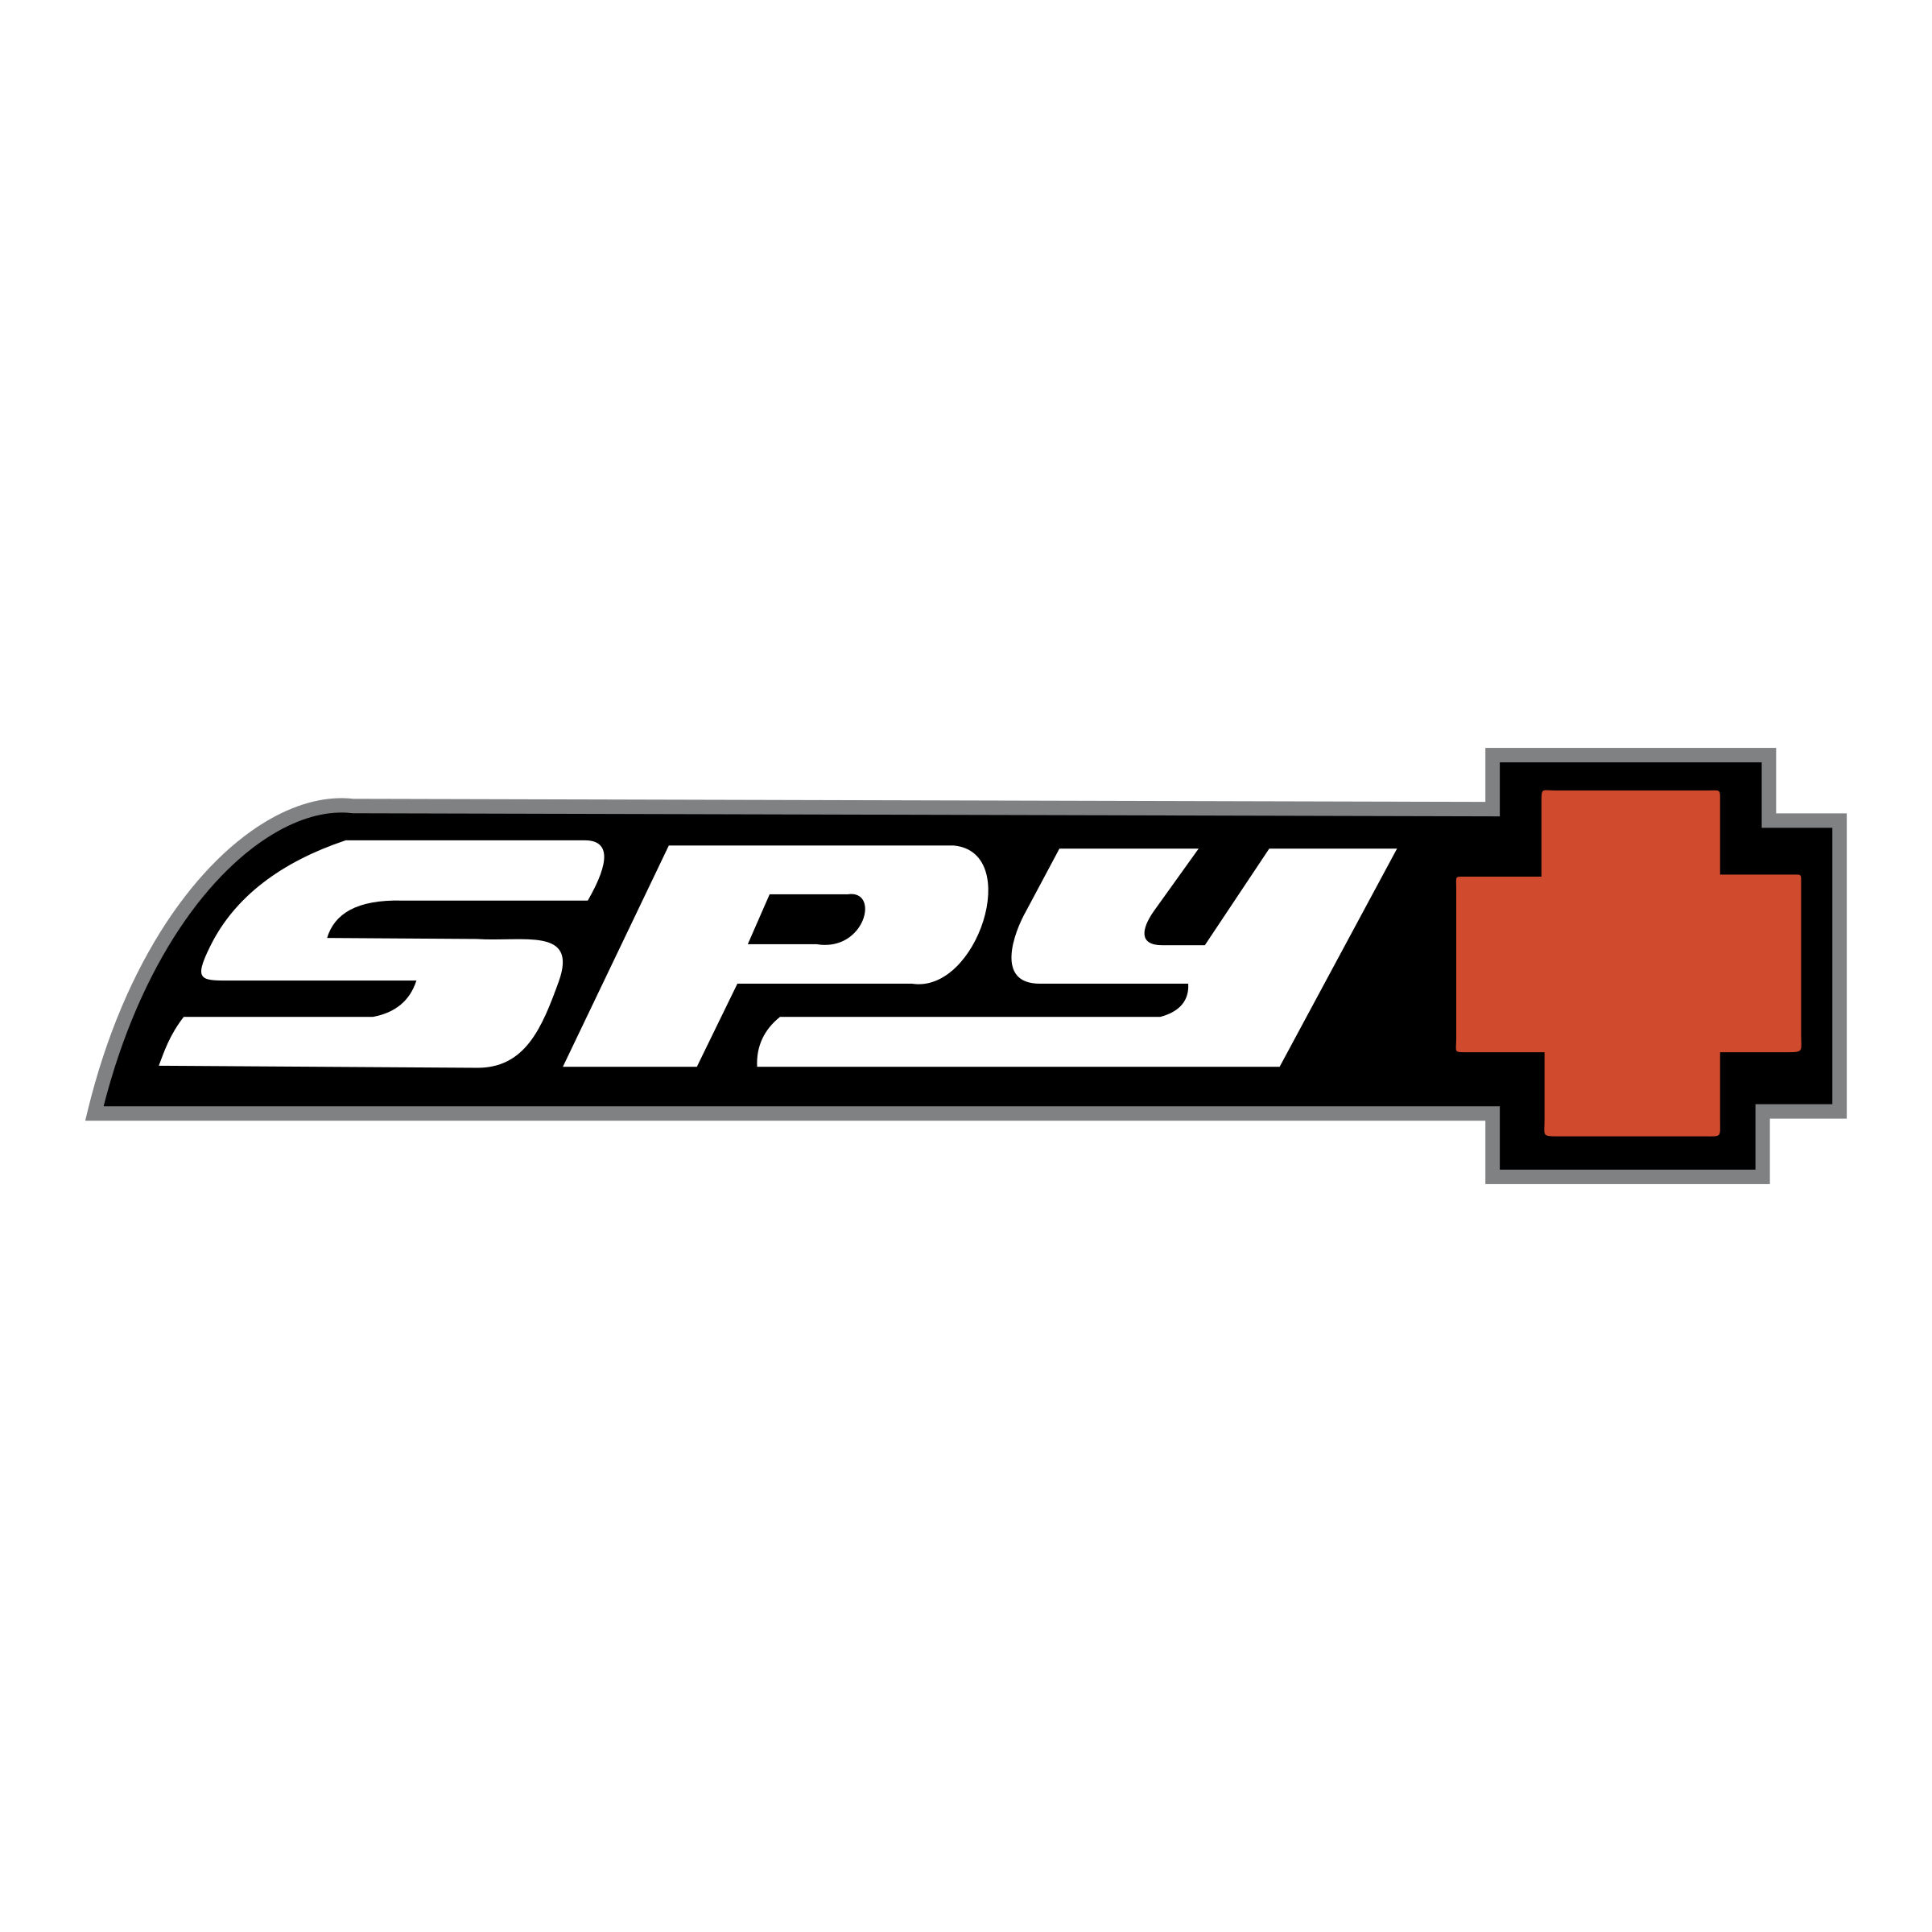 spy-logo-png-transparent.png